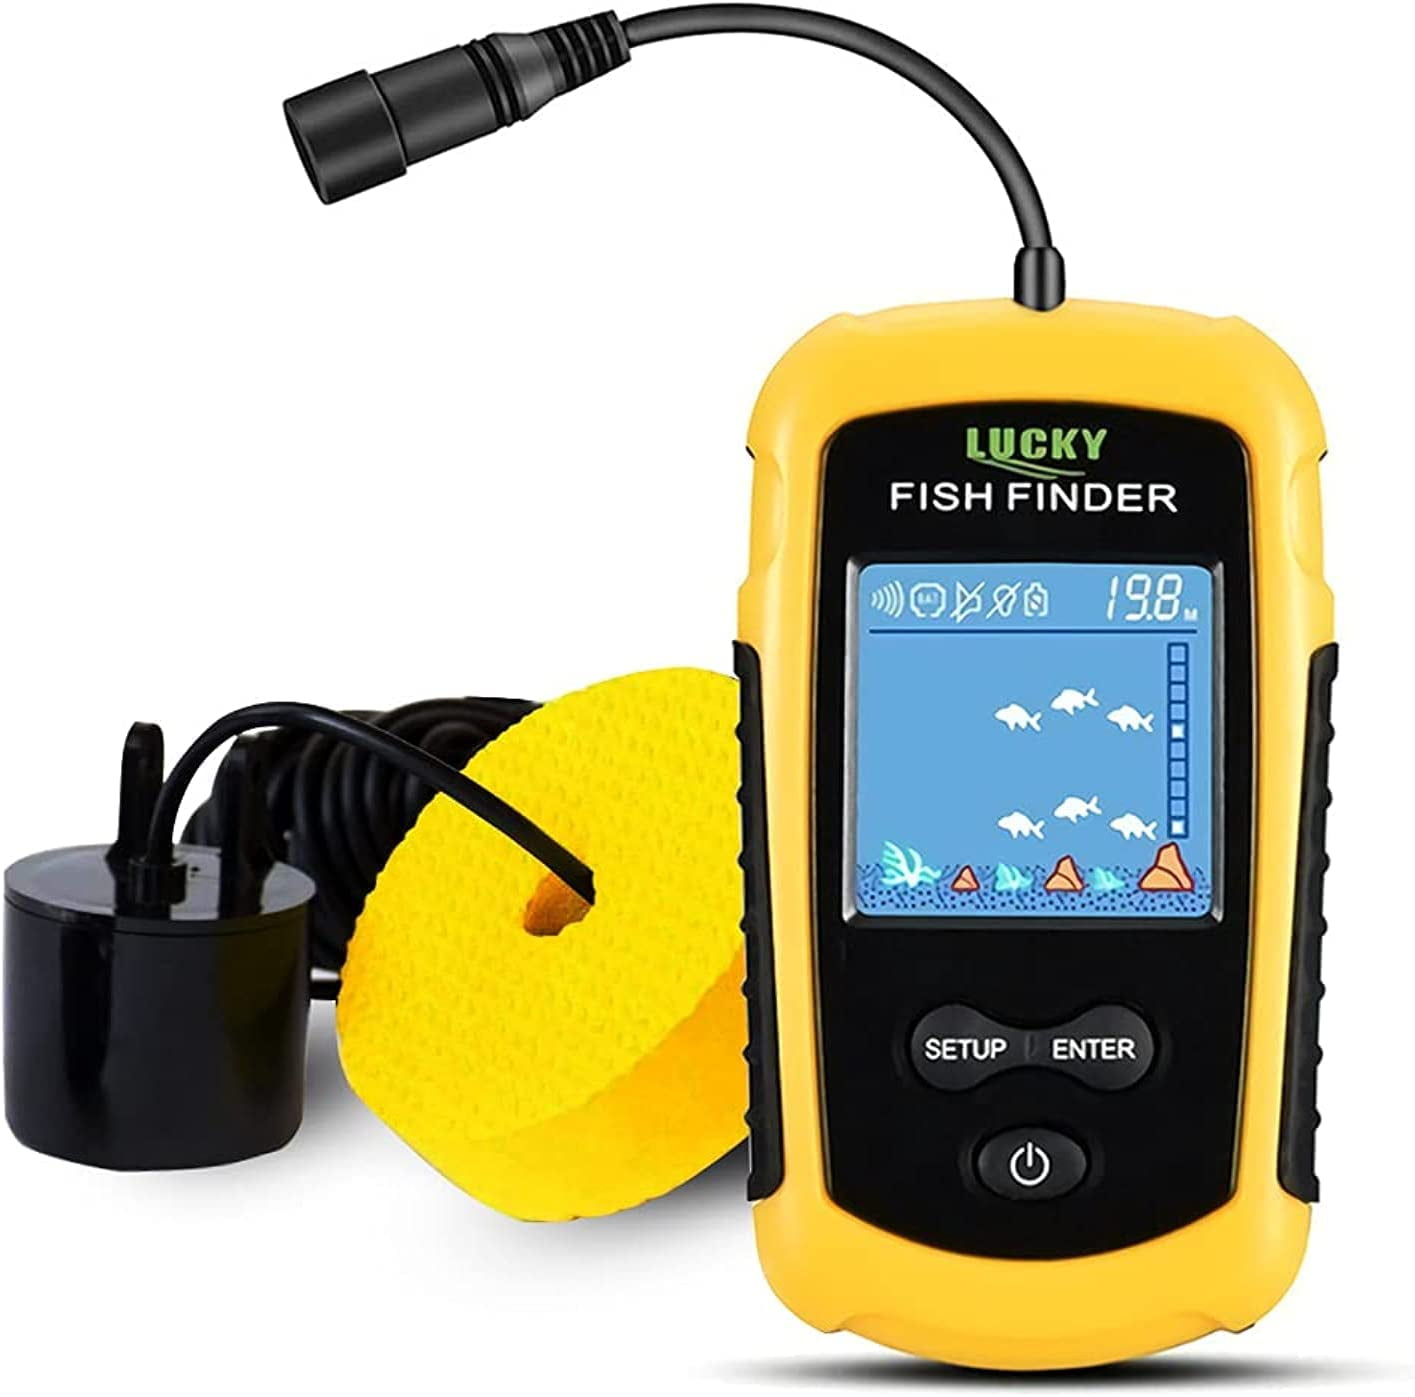 Deals on Lucky Wireless Fish Finder Sonar Transducer Bait Boat Depth  Finders Fishfinder Wireless Fishing Sonar For Kayak Fishing Sea Fishing, Compare Prices & Shop Online